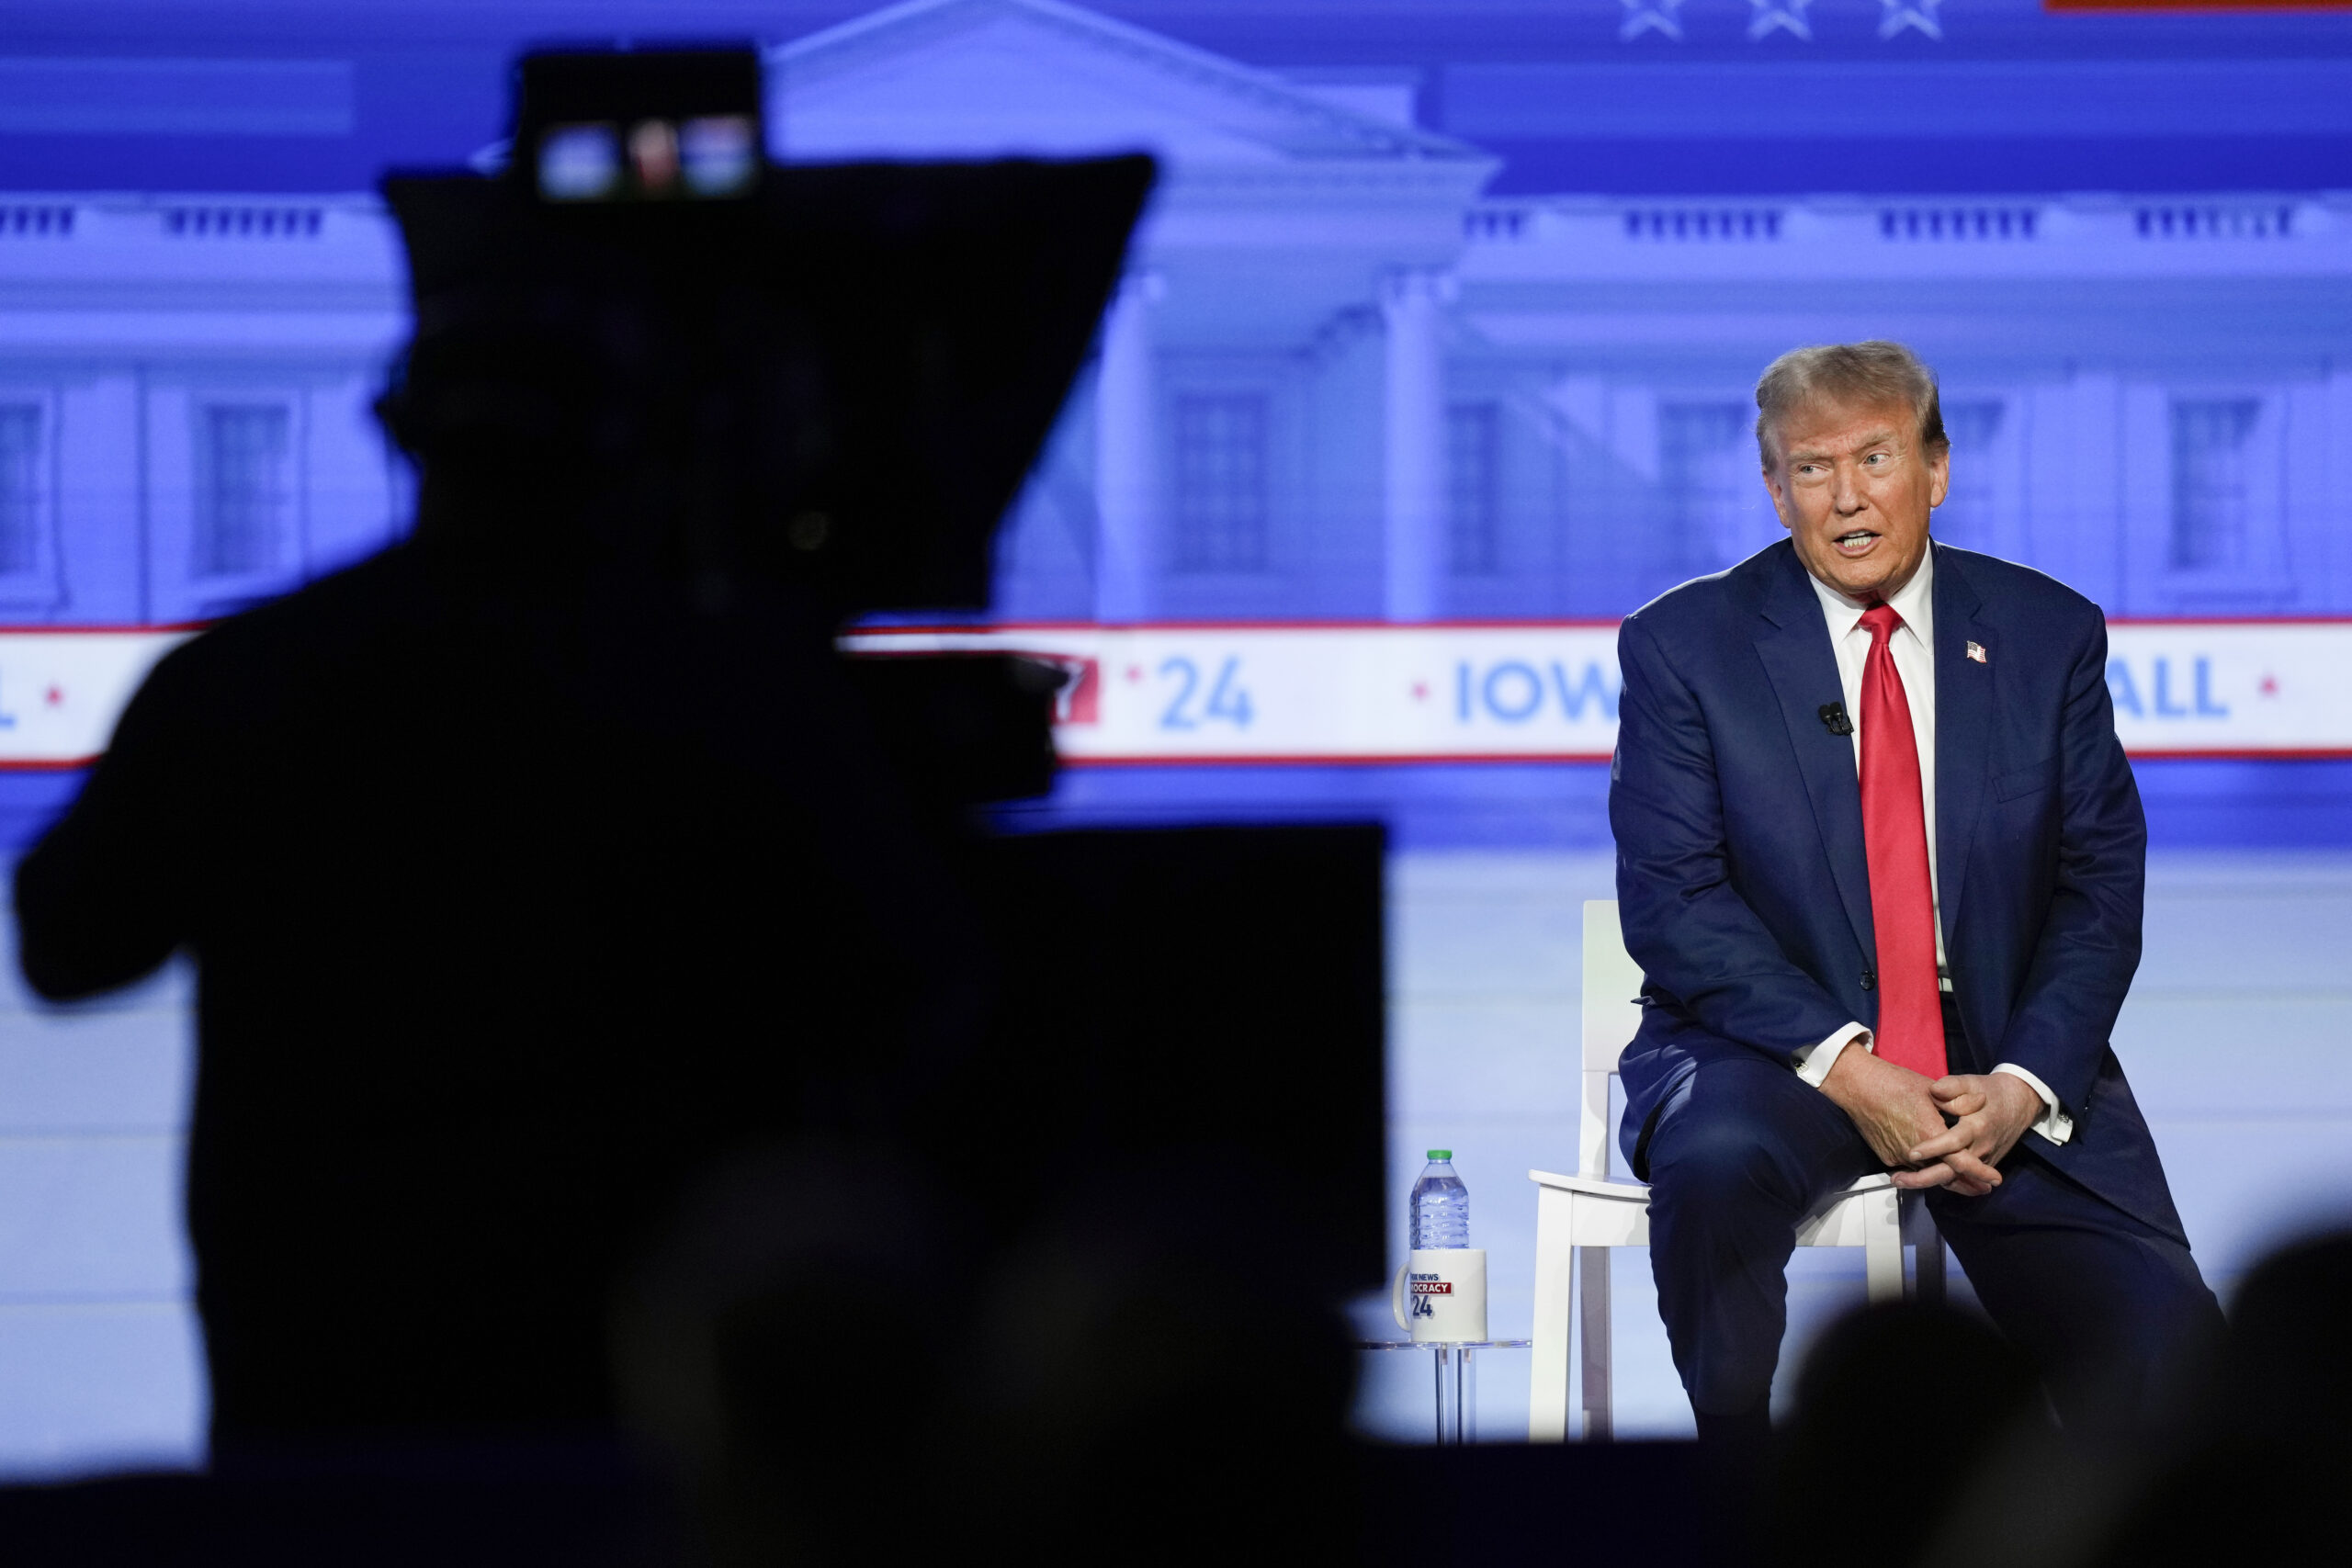 Trump Town Hall on Fox News Thumps CNN’s GOP Debate in Ratings